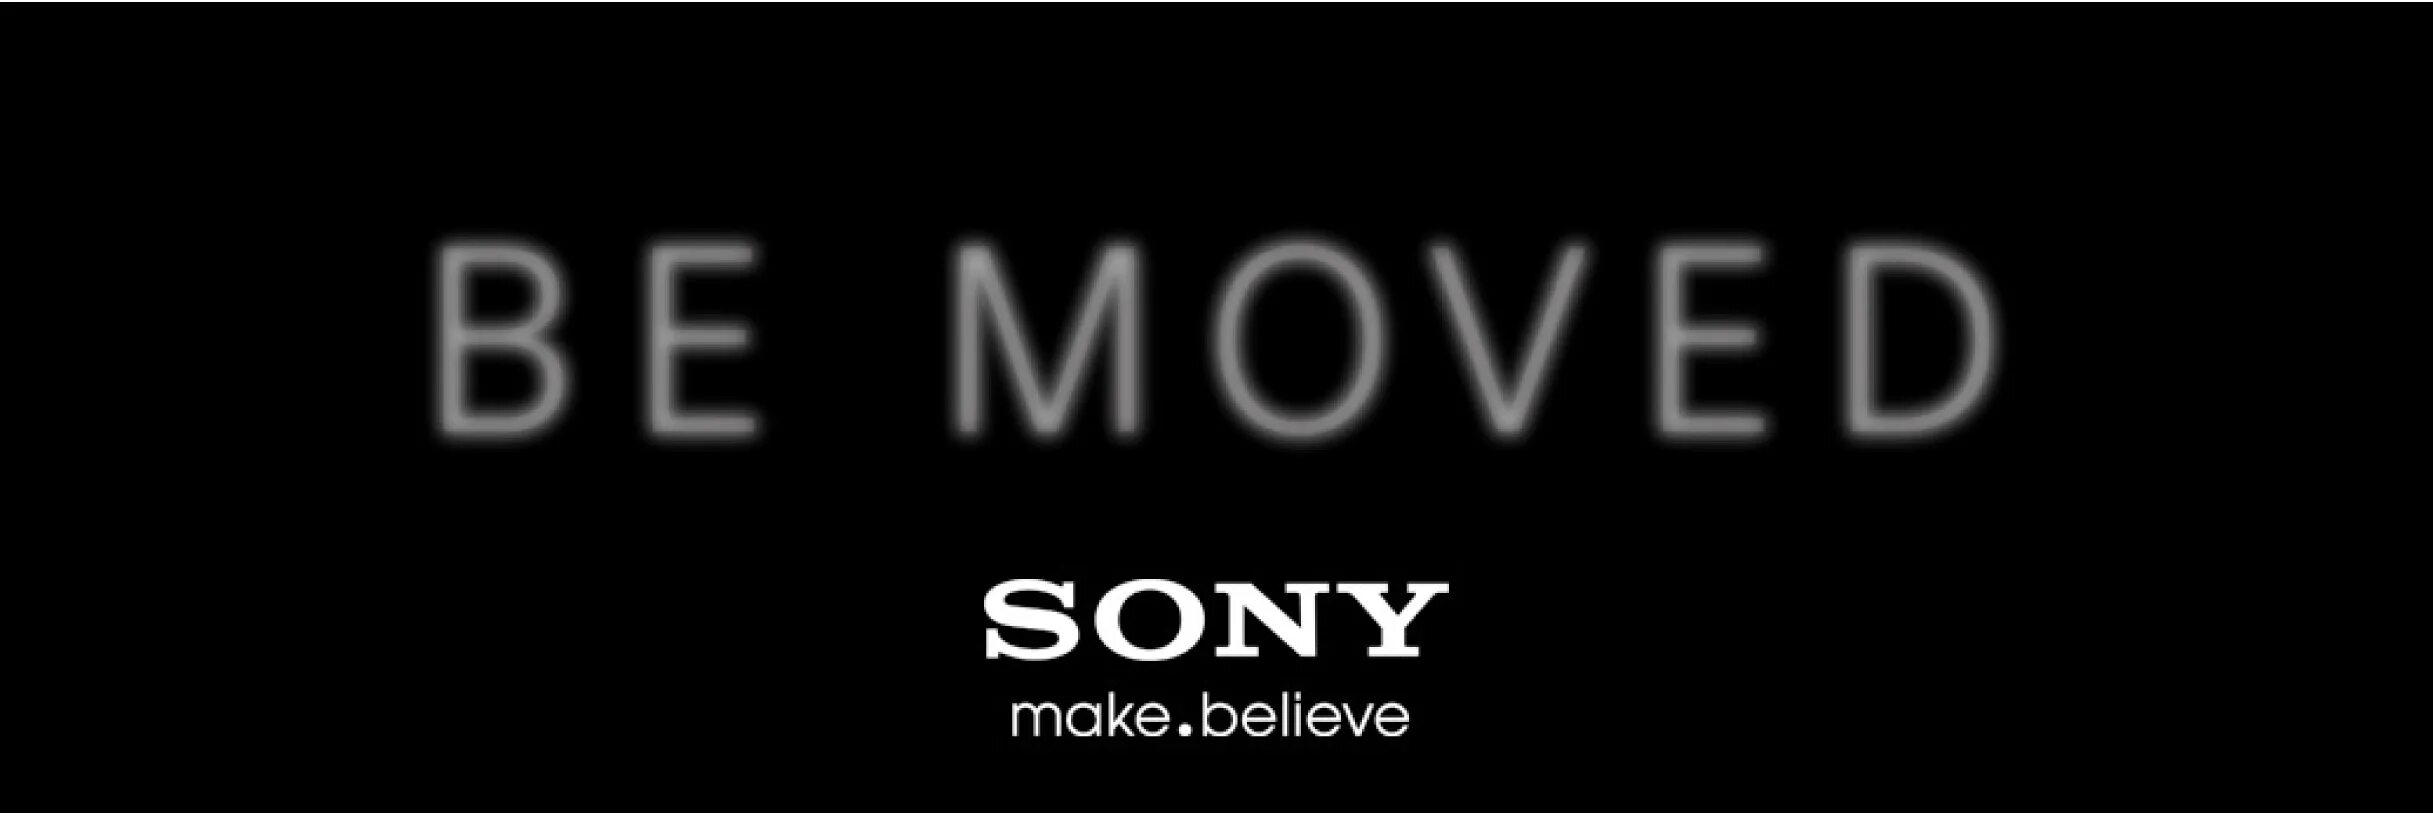 Sony be moved. Sony make believe. Sony make believe знак. Sony make believe надпись фото. Believe do make